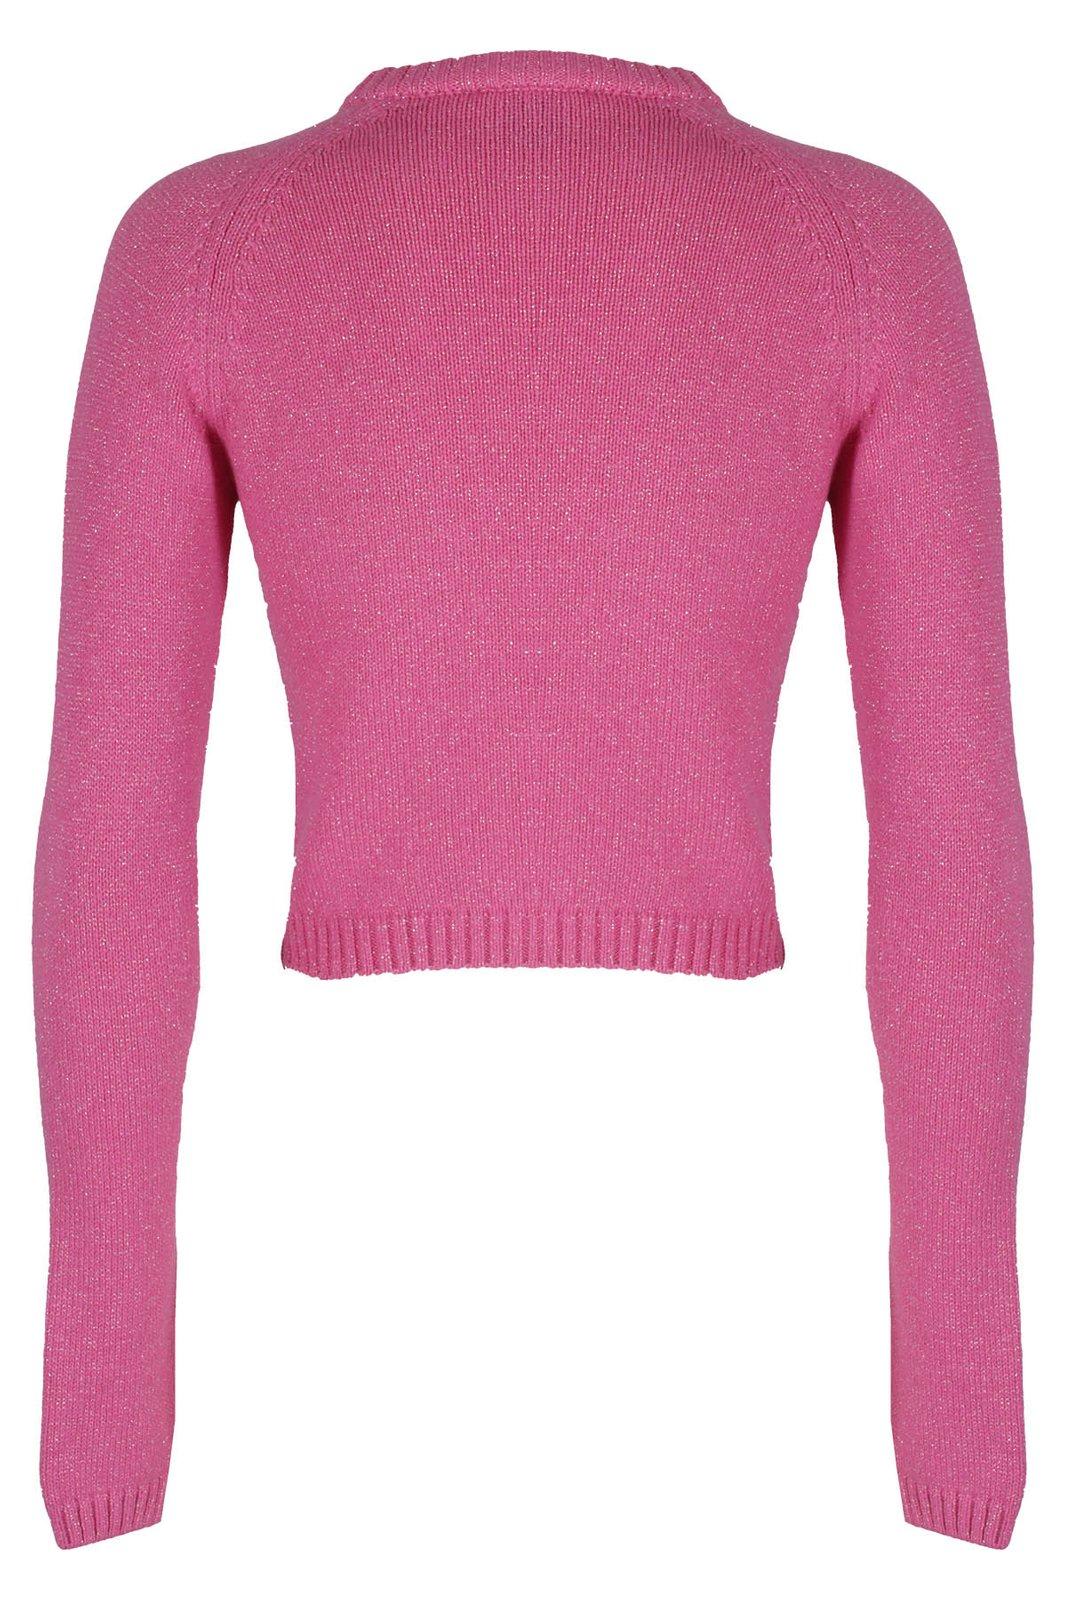 Shop Chiara Ferragni Cut-out Detailed Knitted Jumper